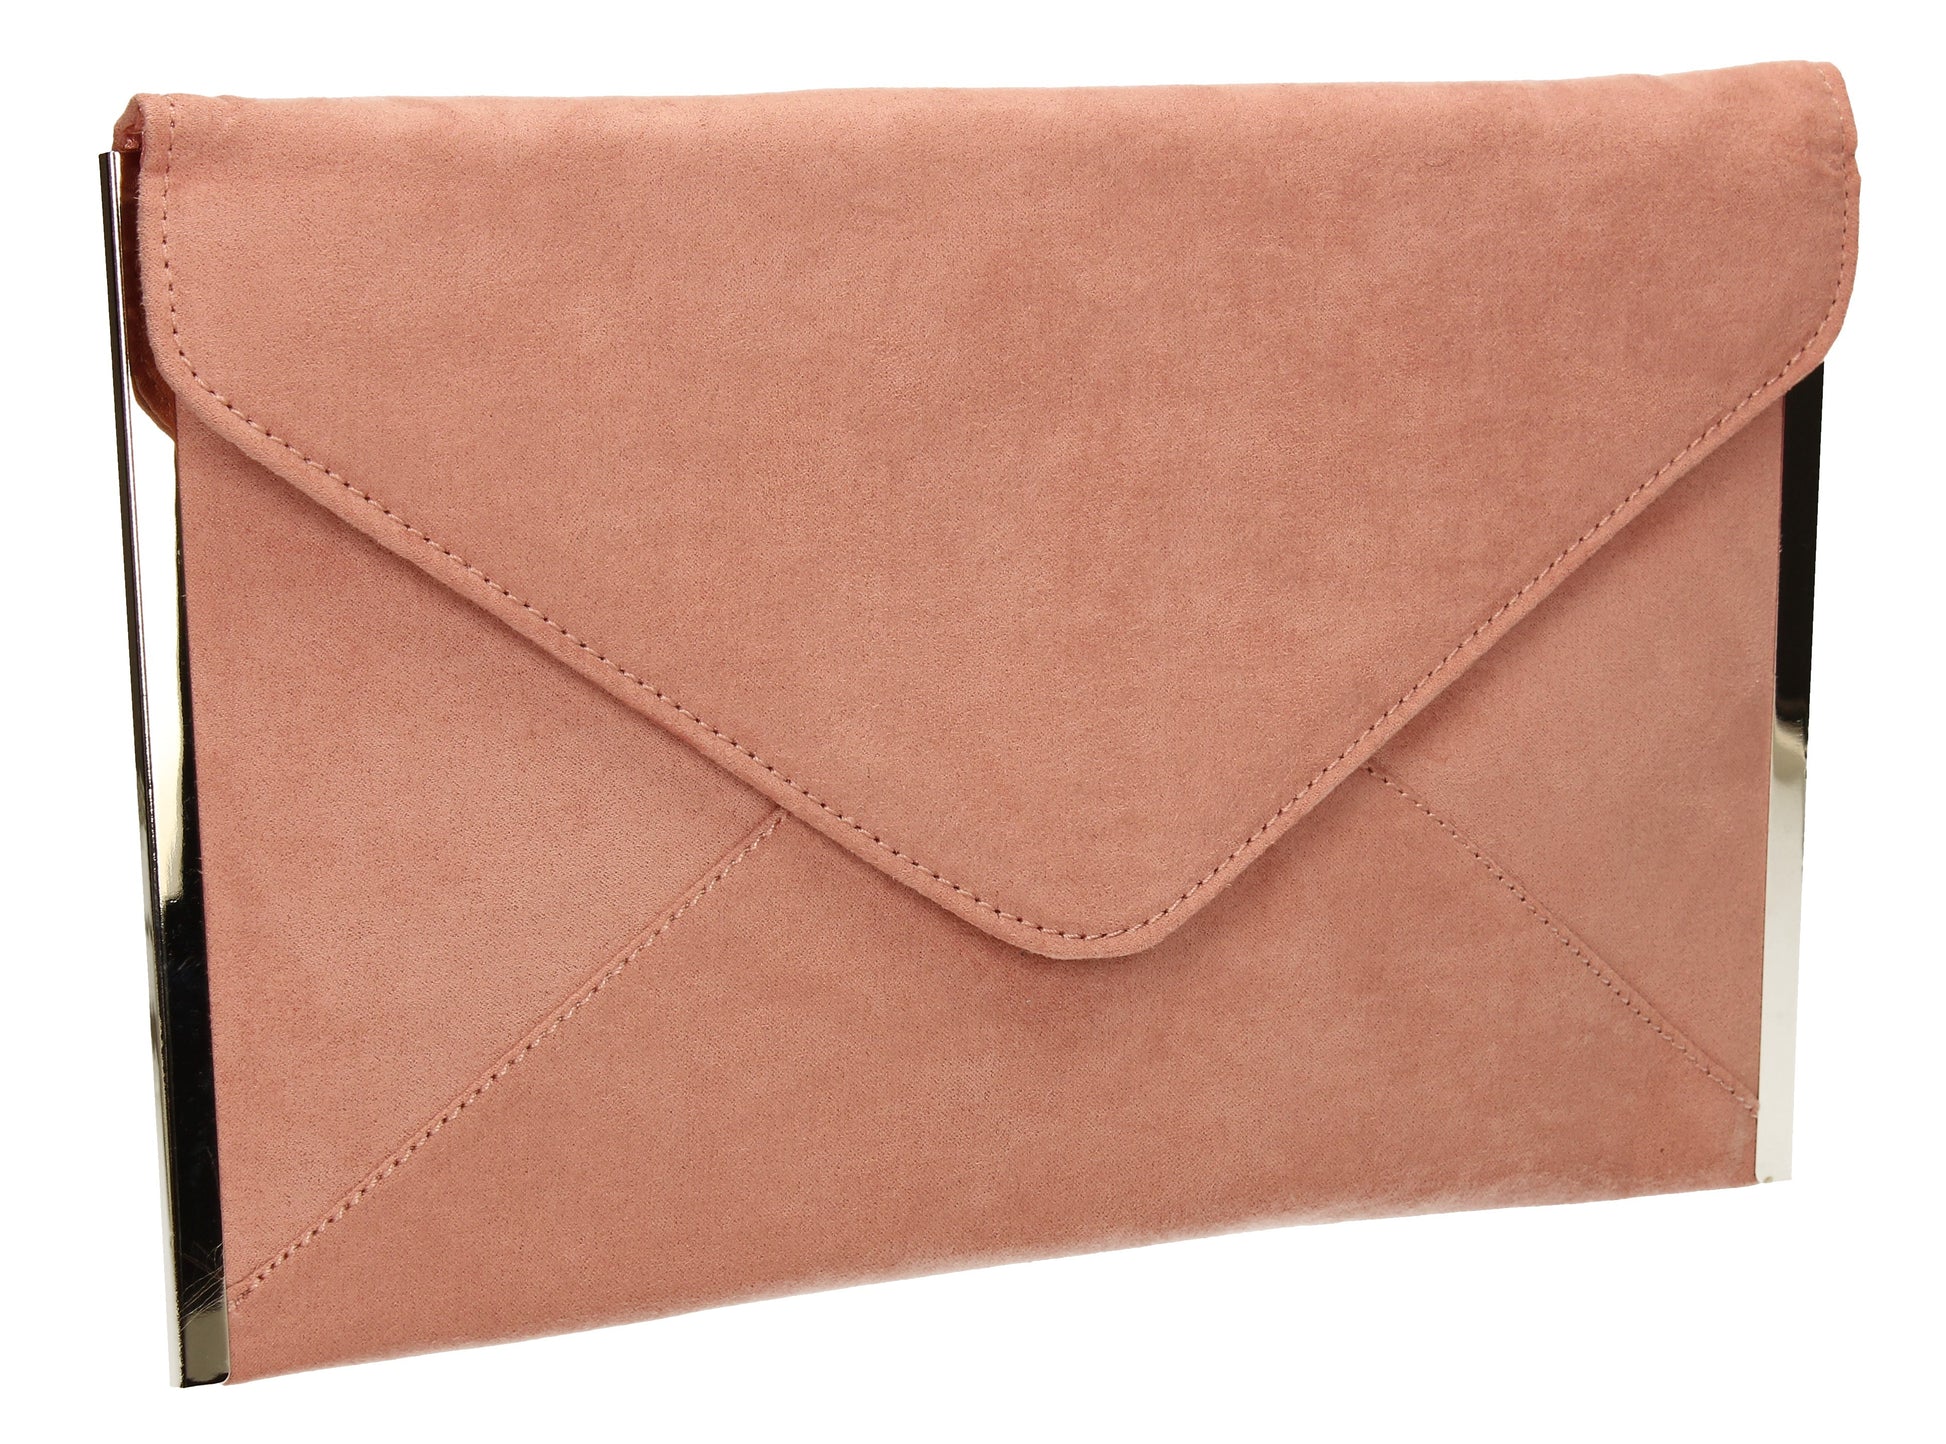 SWANKYSWANS Louis Clutch Bag Blush Cute Cheap Clutch Bag For Weddings School and Work